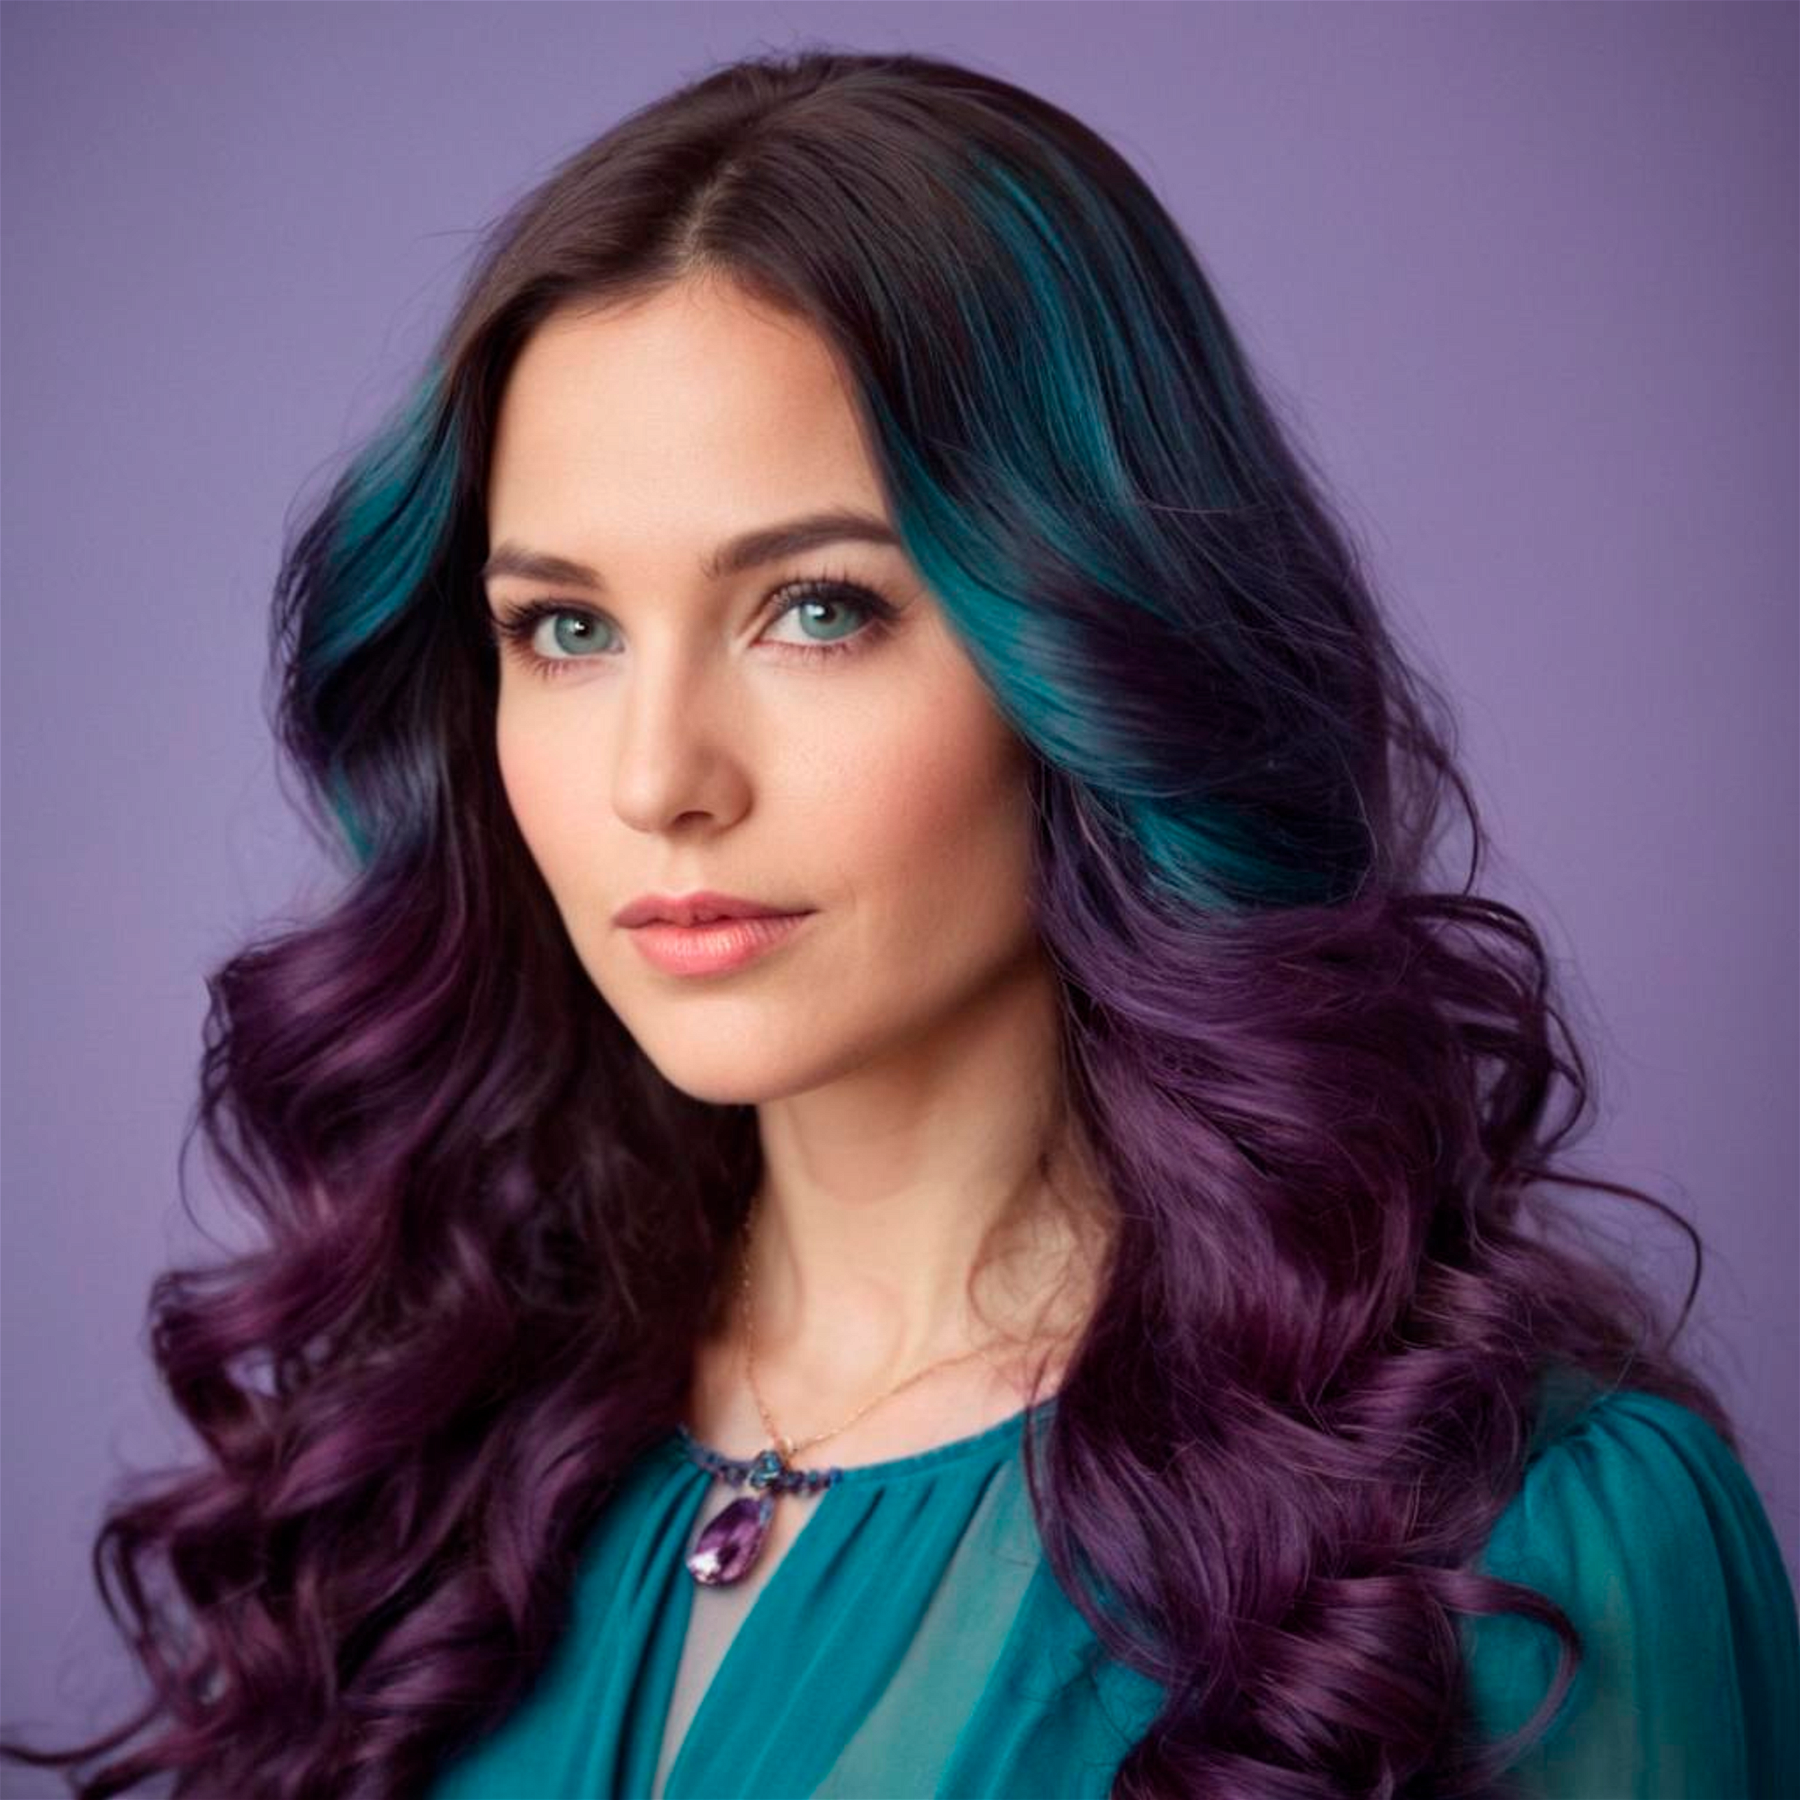 Teal with purple highlight hair